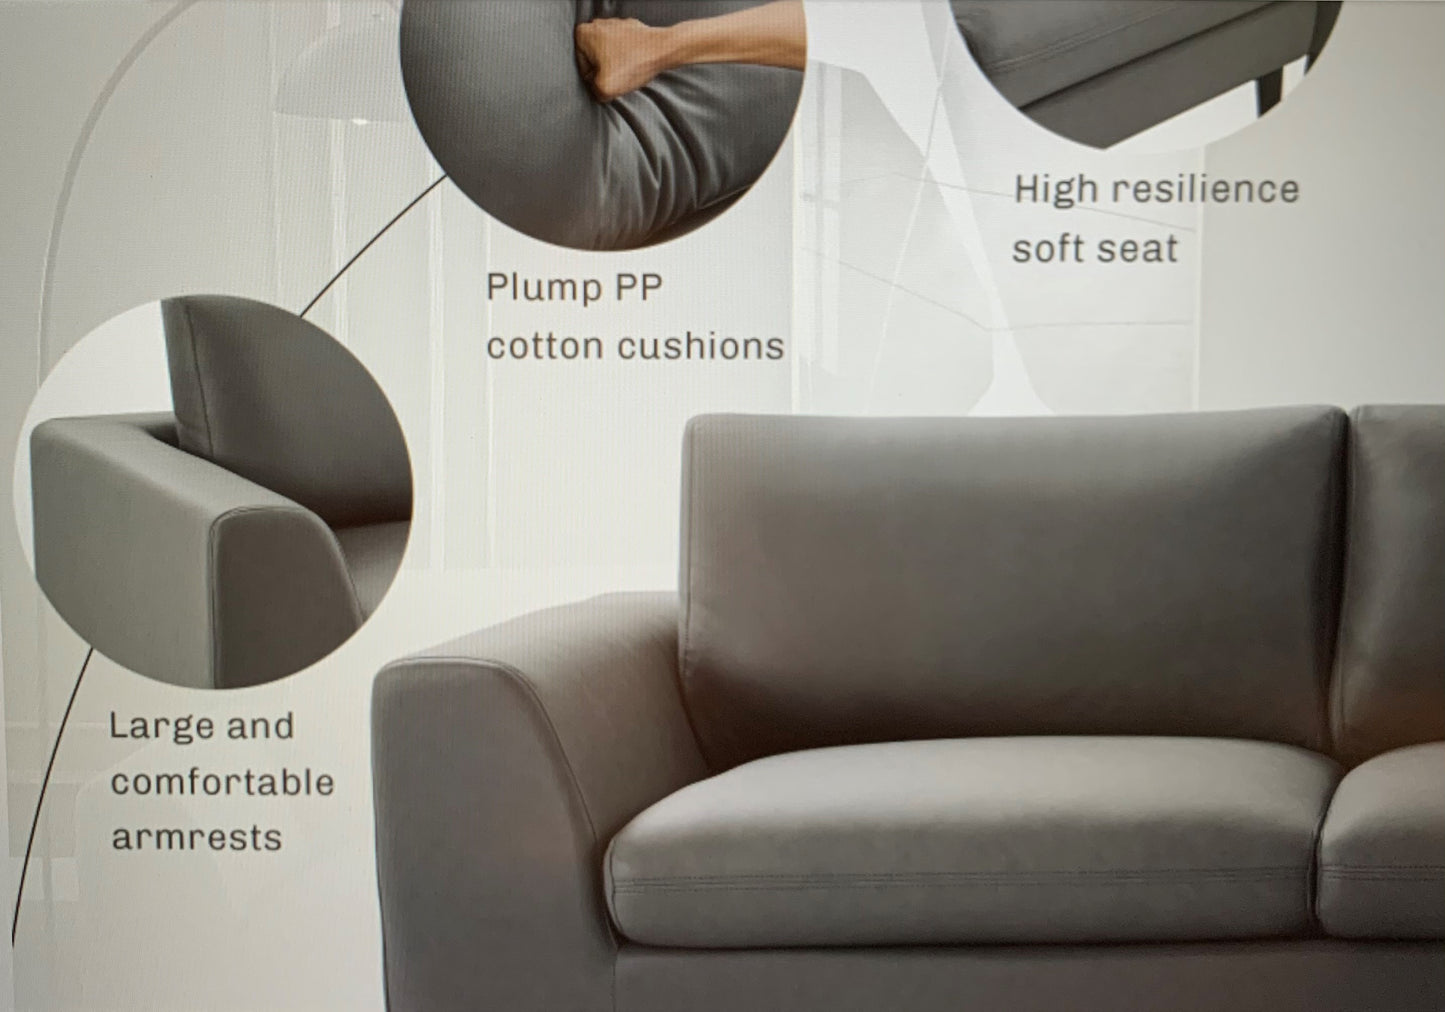 Air Leather Corner Sectional Sofa with Metal Legs, Huge Corner Wedge Design, Modern English Arm